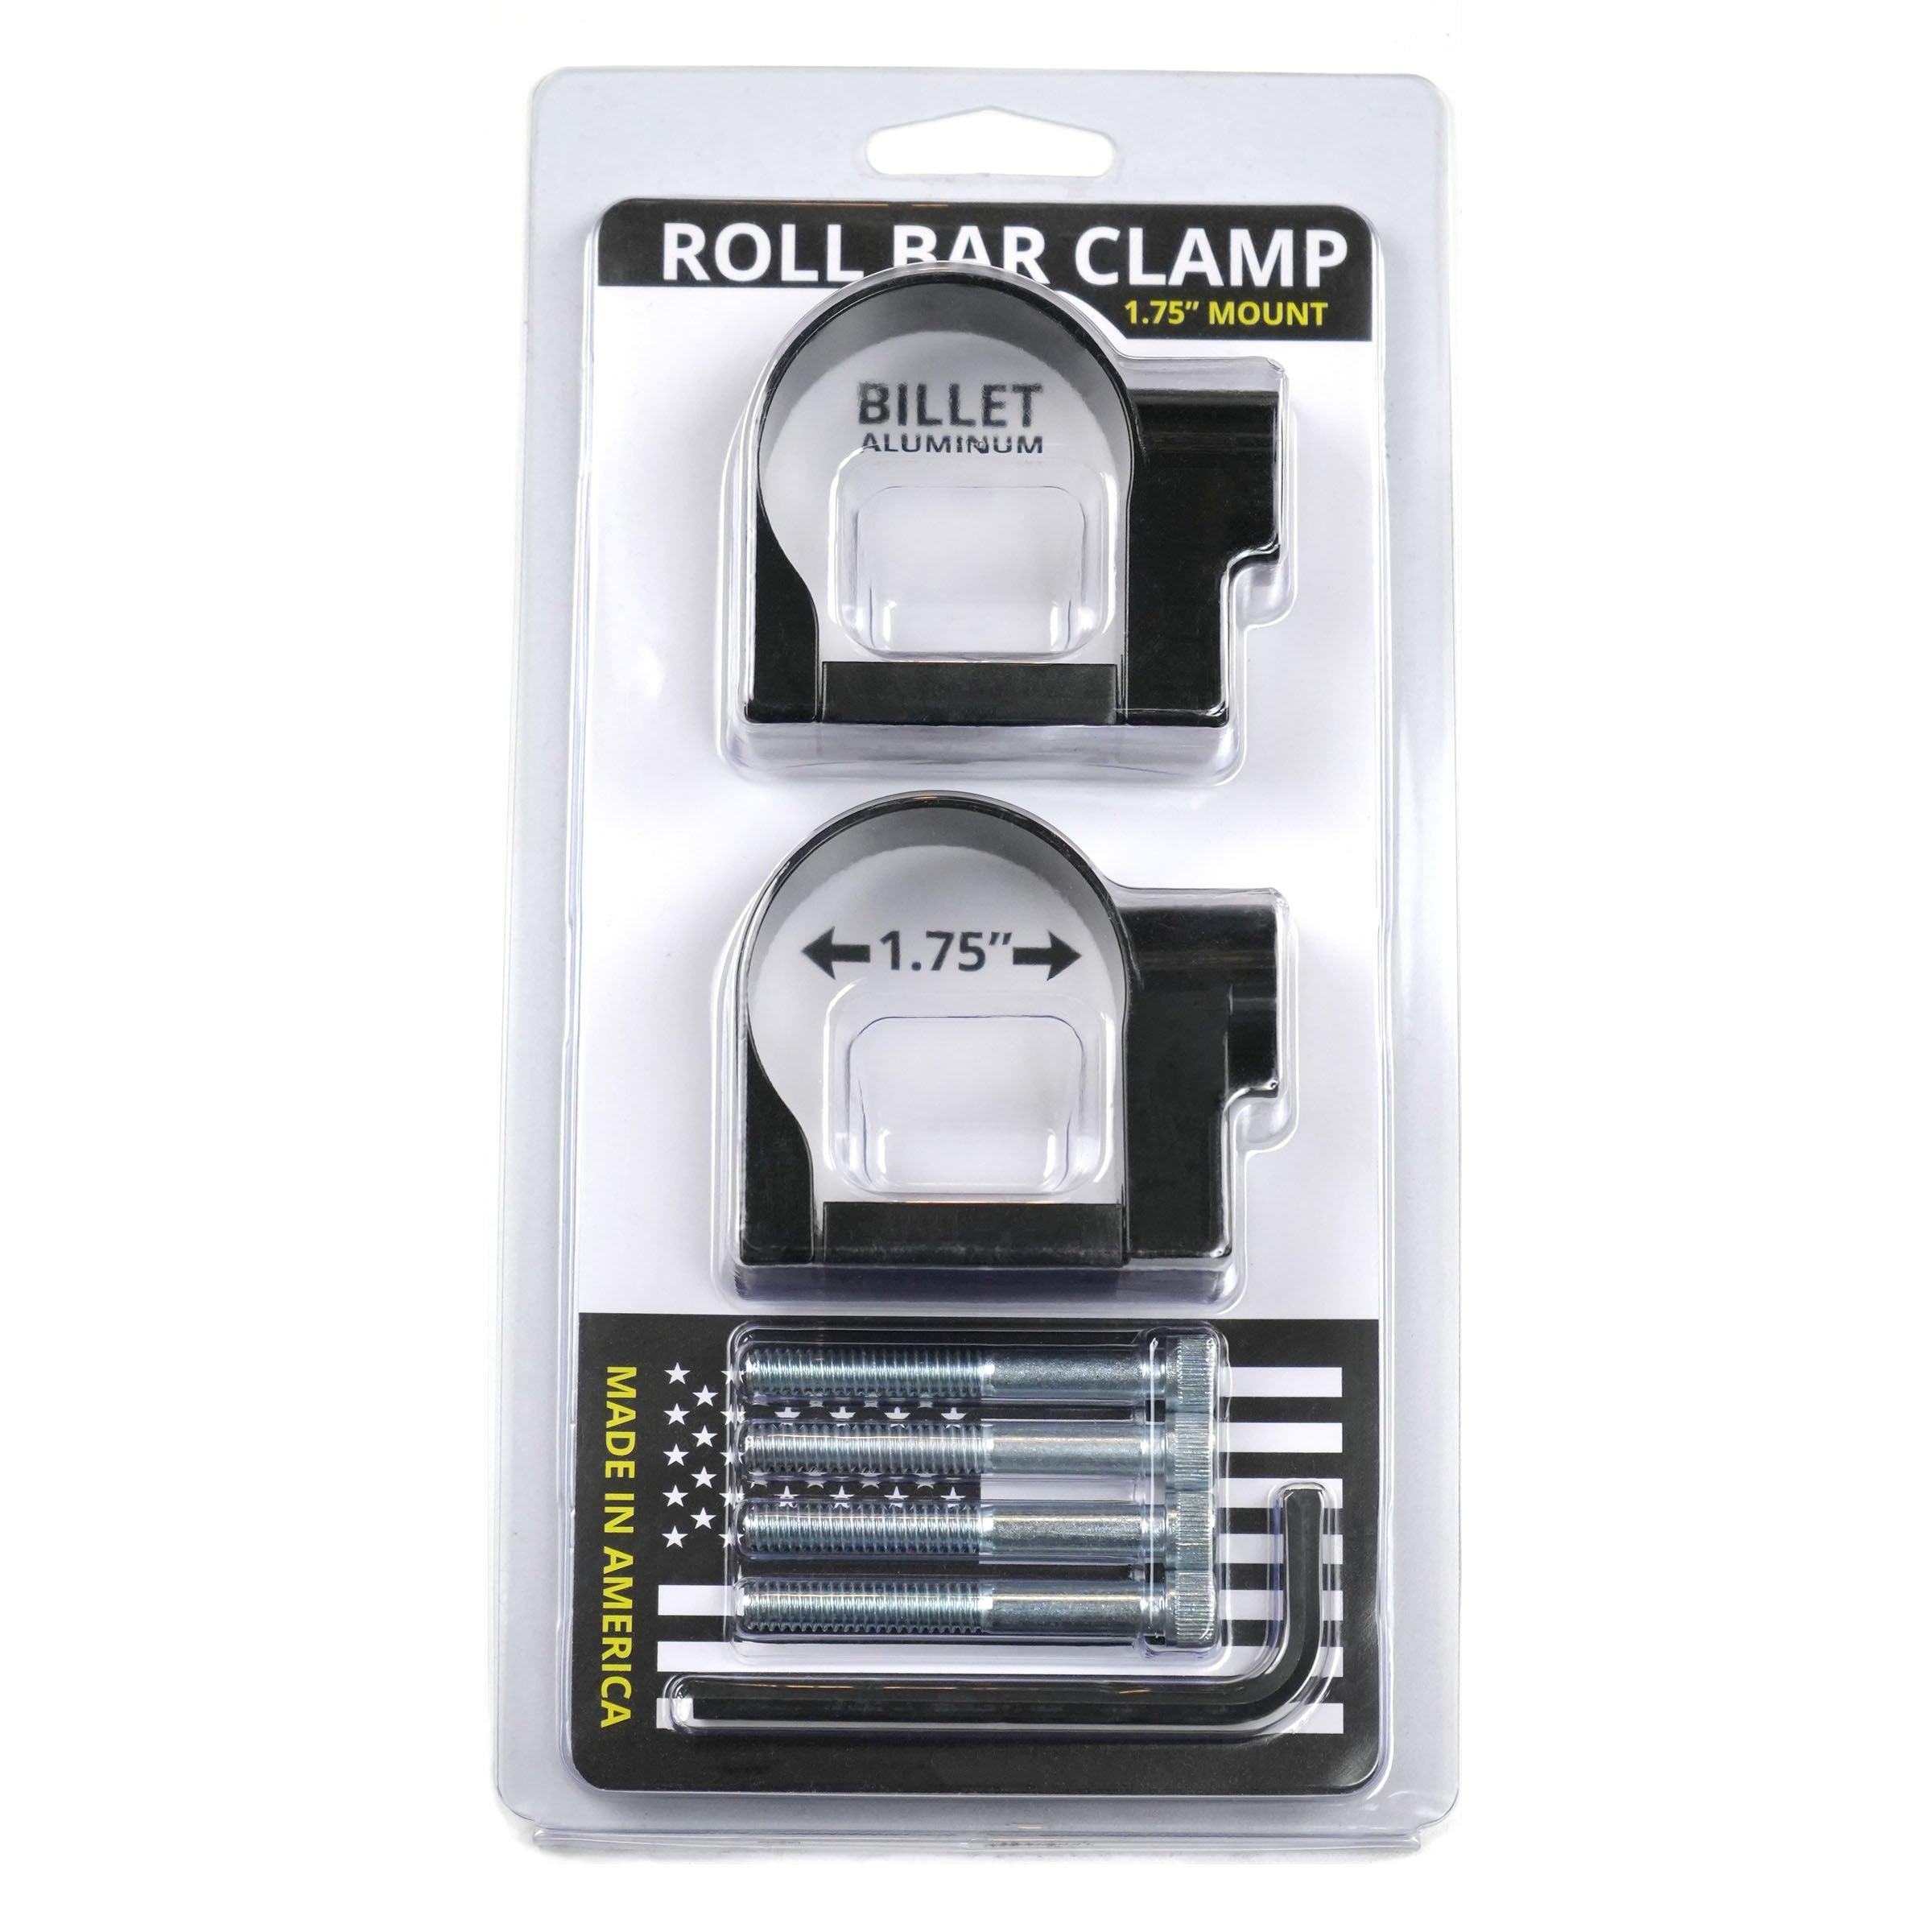 Billet 1.75" Roll Bar Clamp